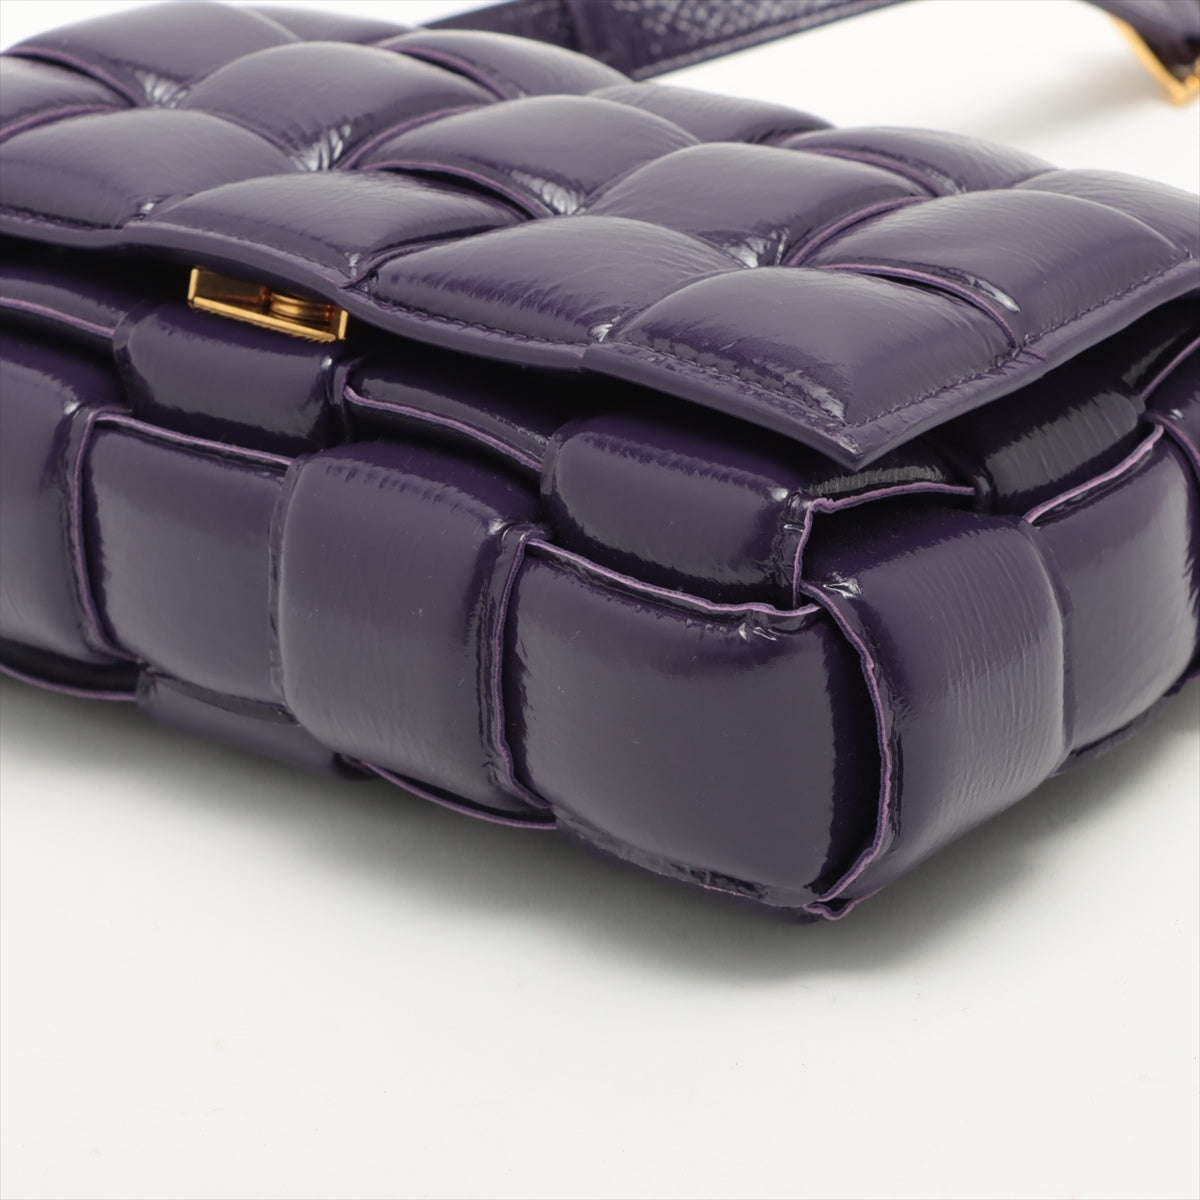 Bottega Veneta maxi intrecciato padded cassette Patent leather Shoulder bag Purple